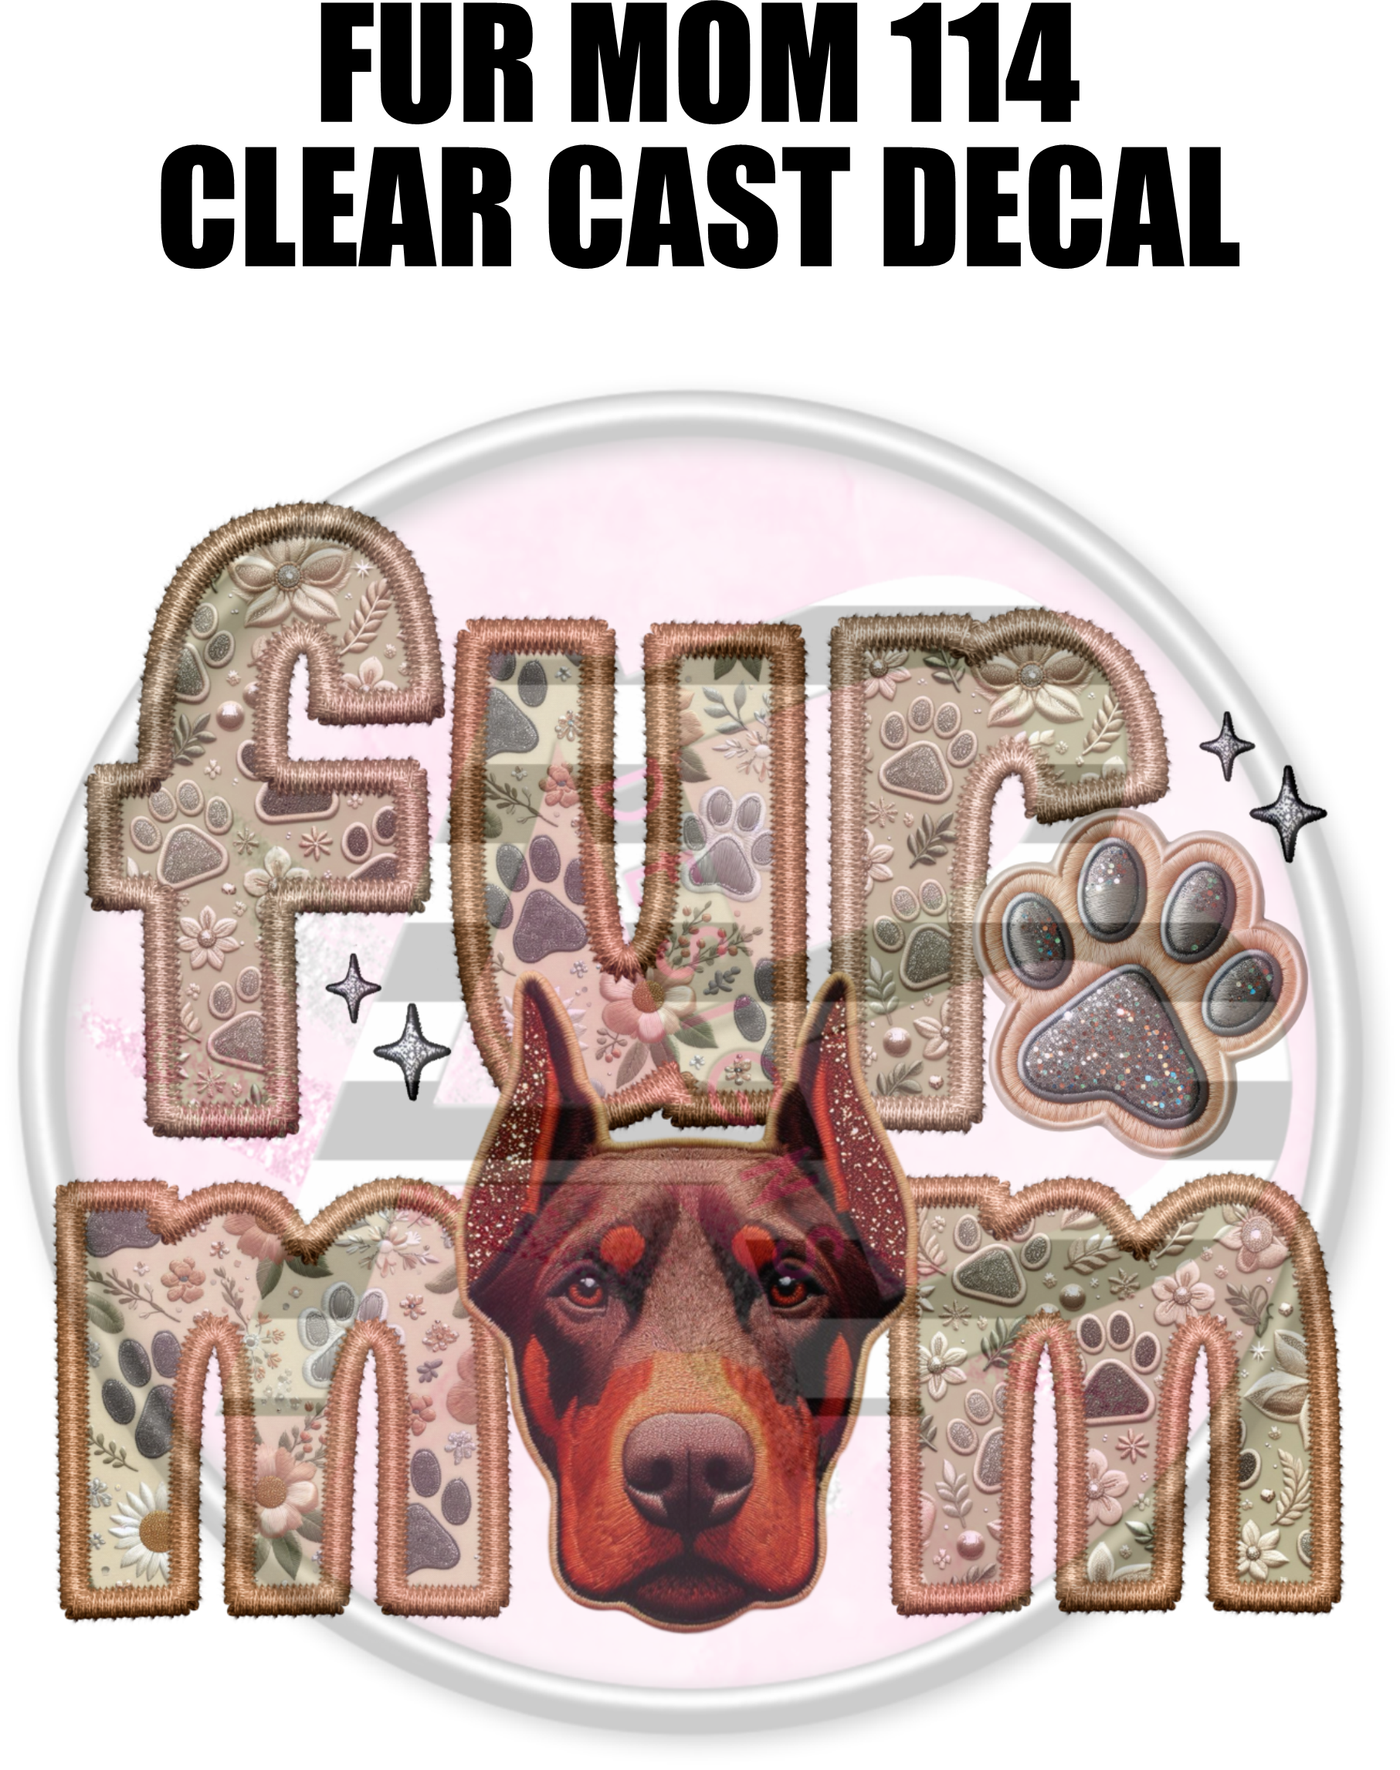 Fur Mom 114 - Clear Cast Decal